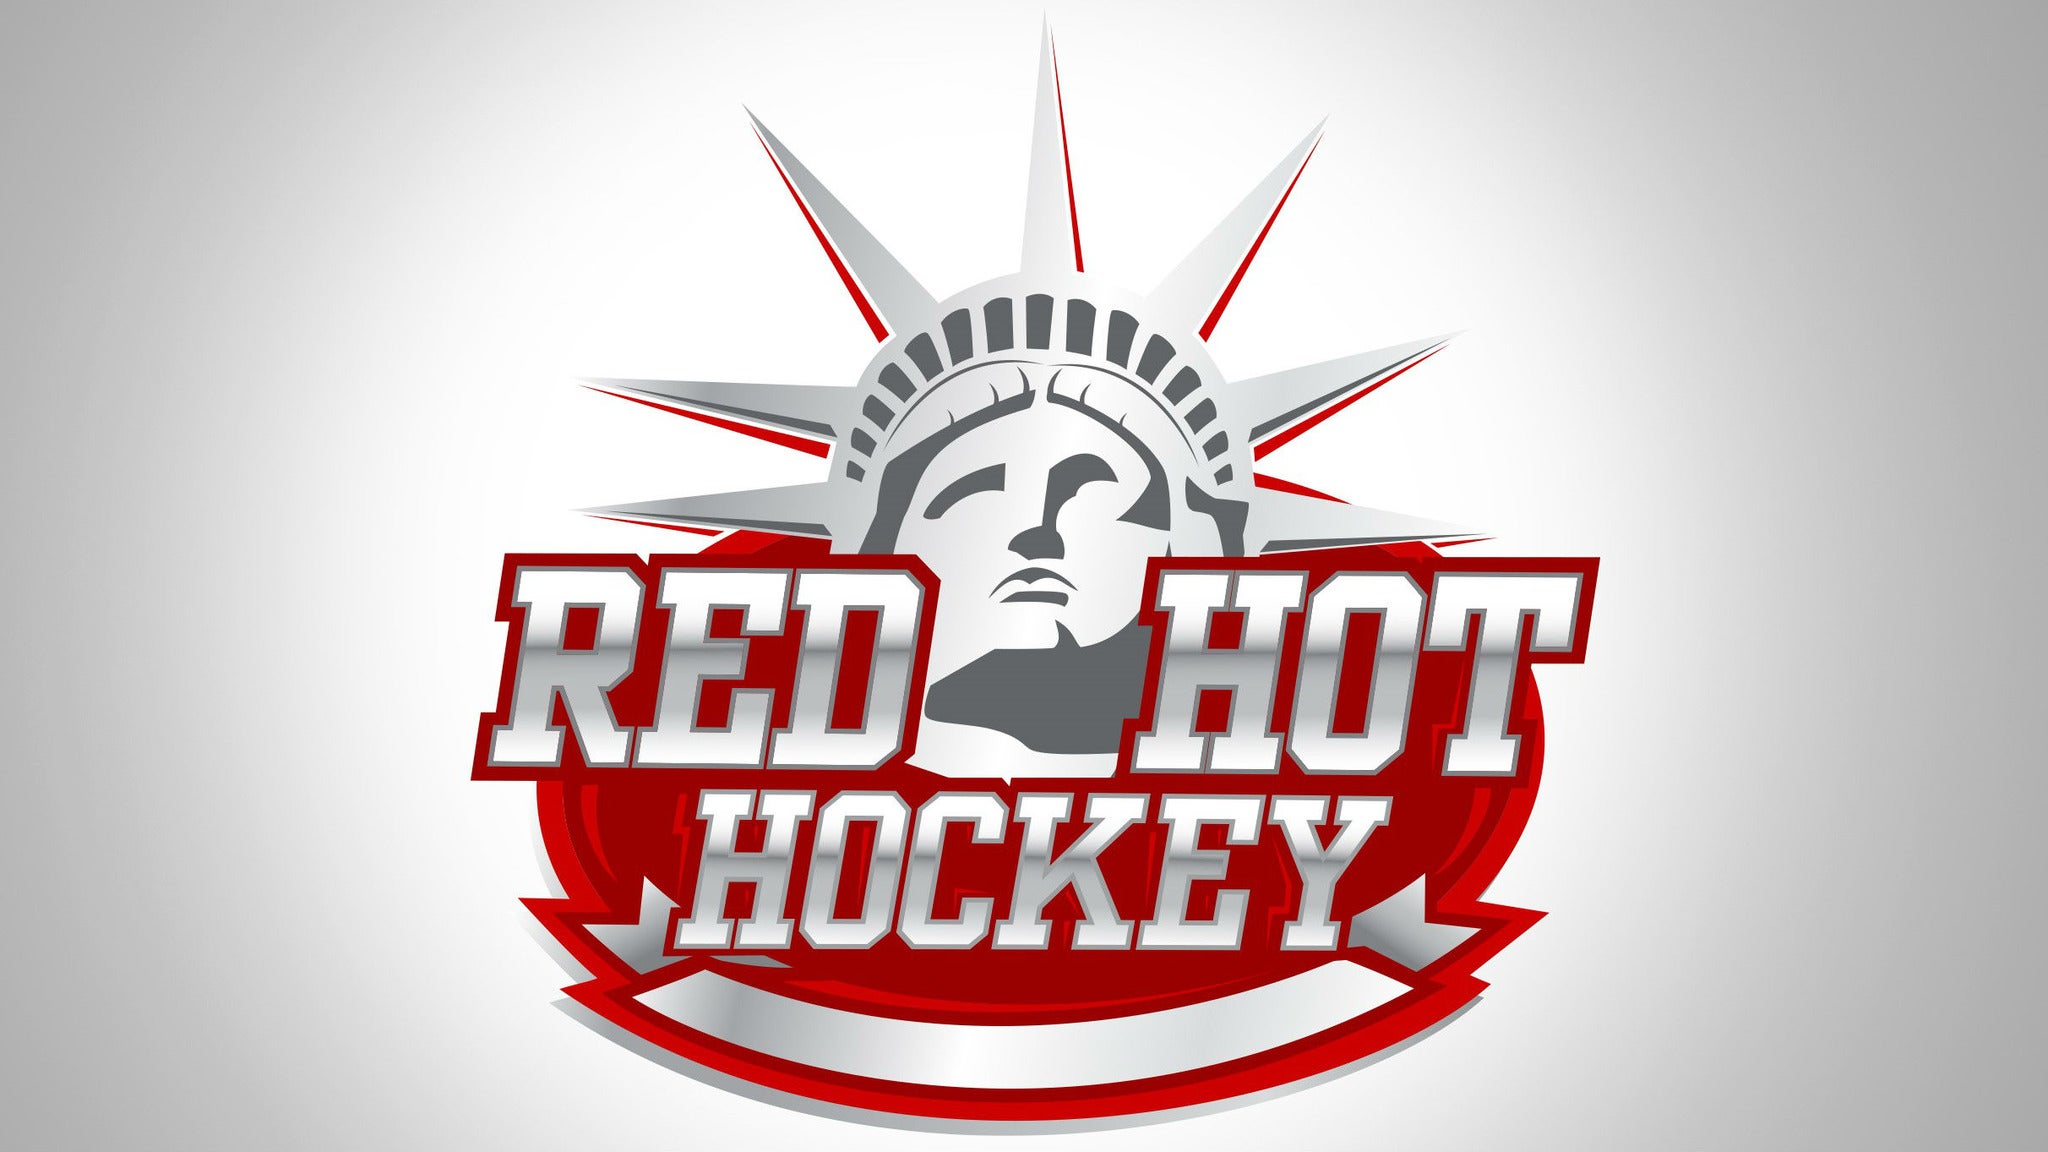 Red Hot Hockey - Boston University v Cornell presale password for approved tickets in New York